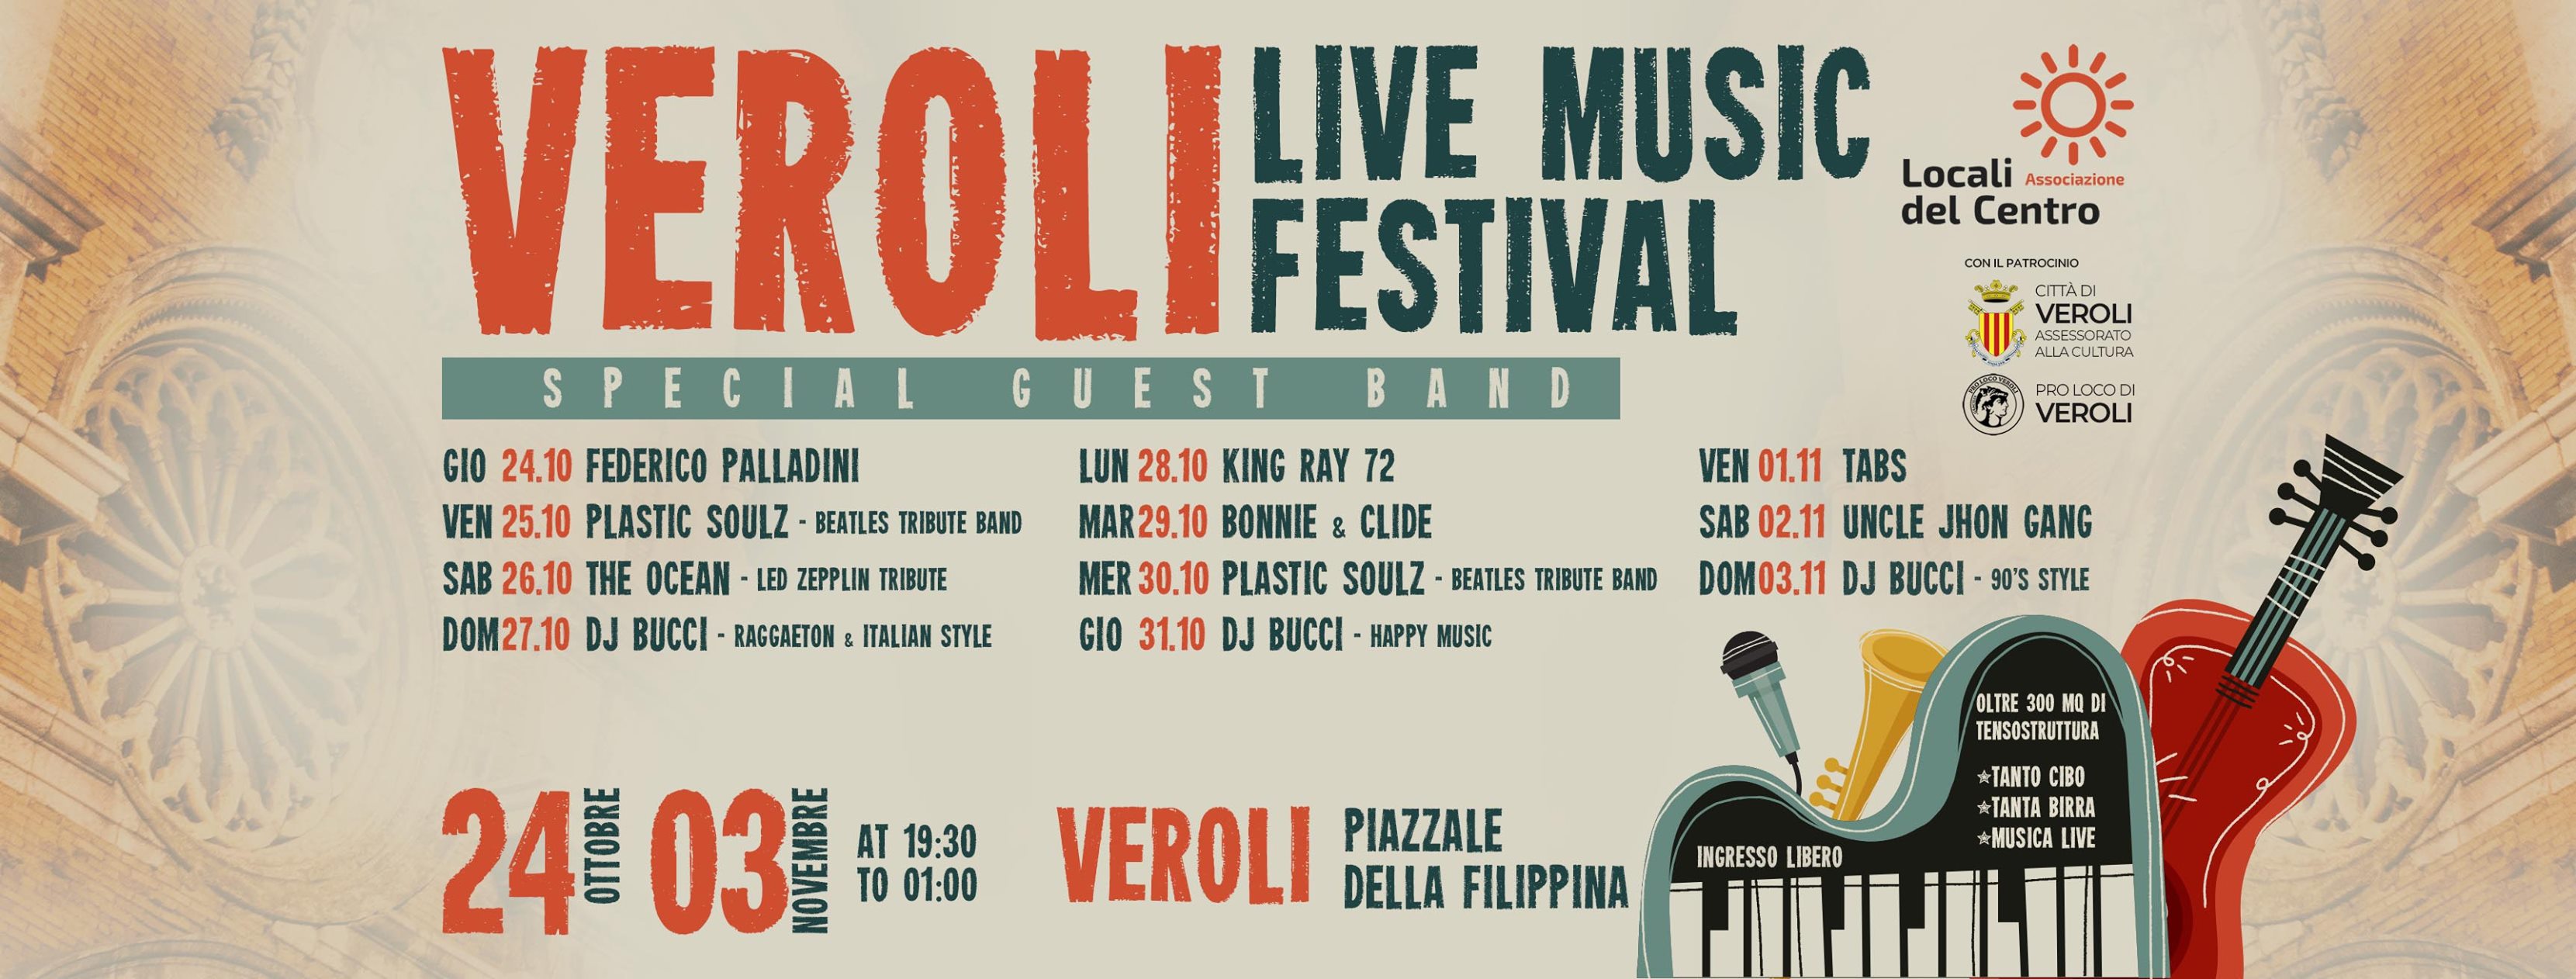 Veroli Live Music Festival